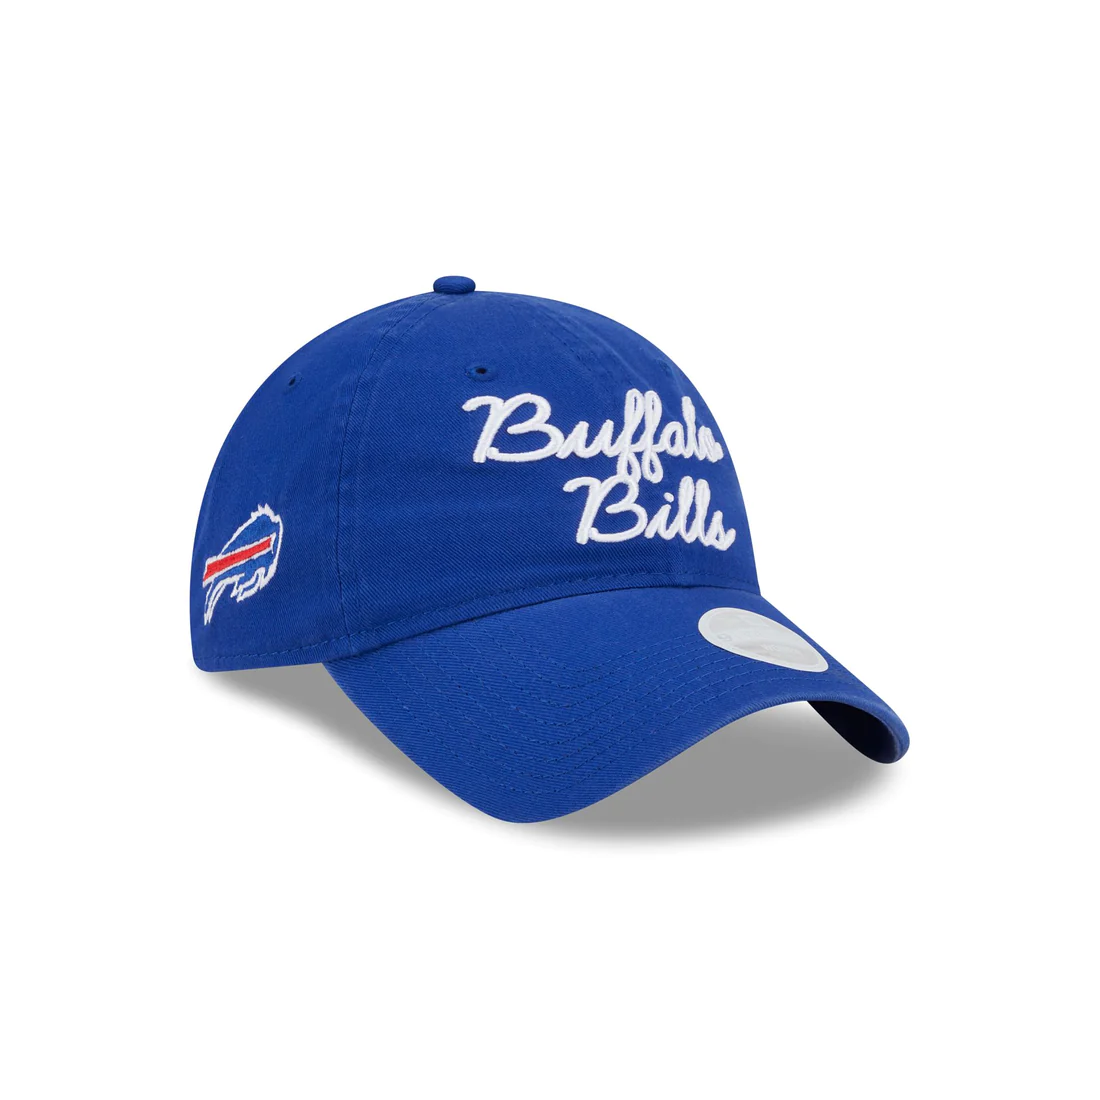 Buffalo Bills Throwback Women's 9TWENTY Adjustable Hat, Blue, NFL by New Era